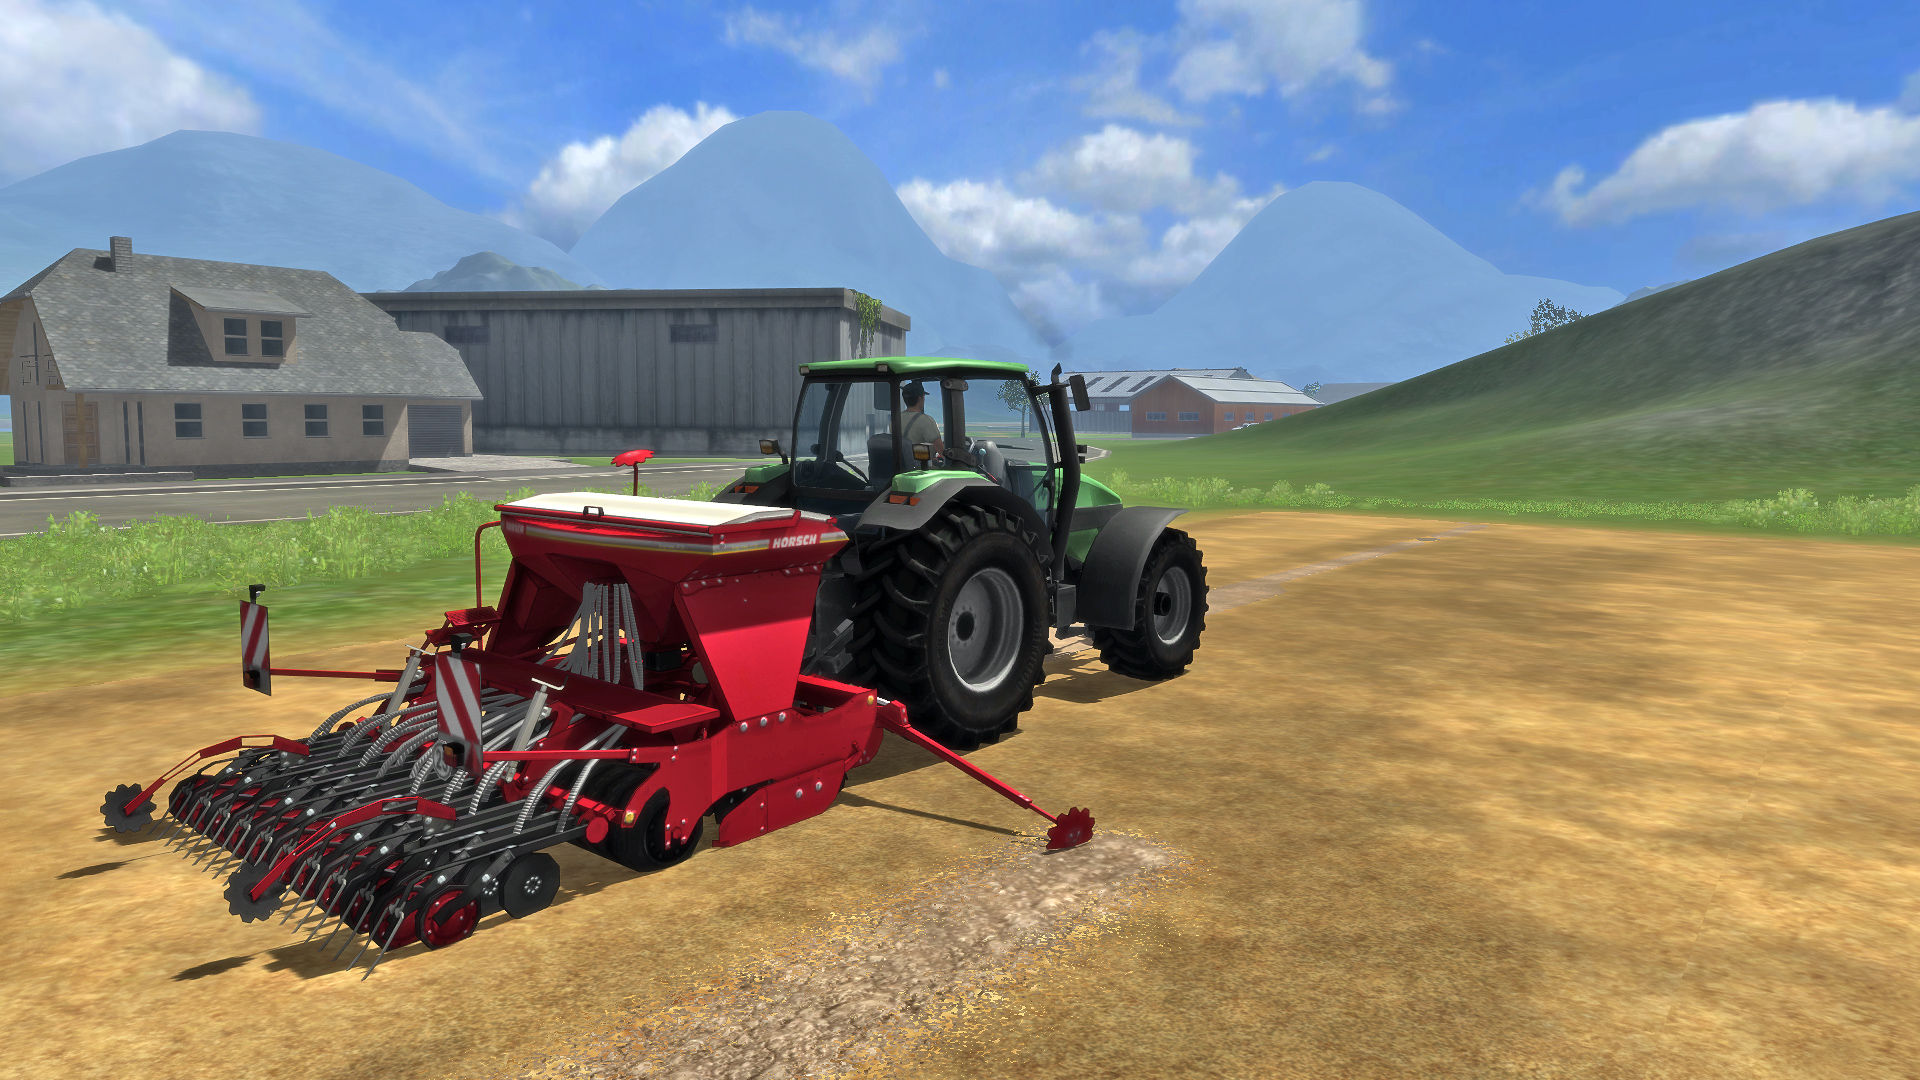 Farming Simulator 2011 - Equipment Pack 3 DLC Steam CD Key